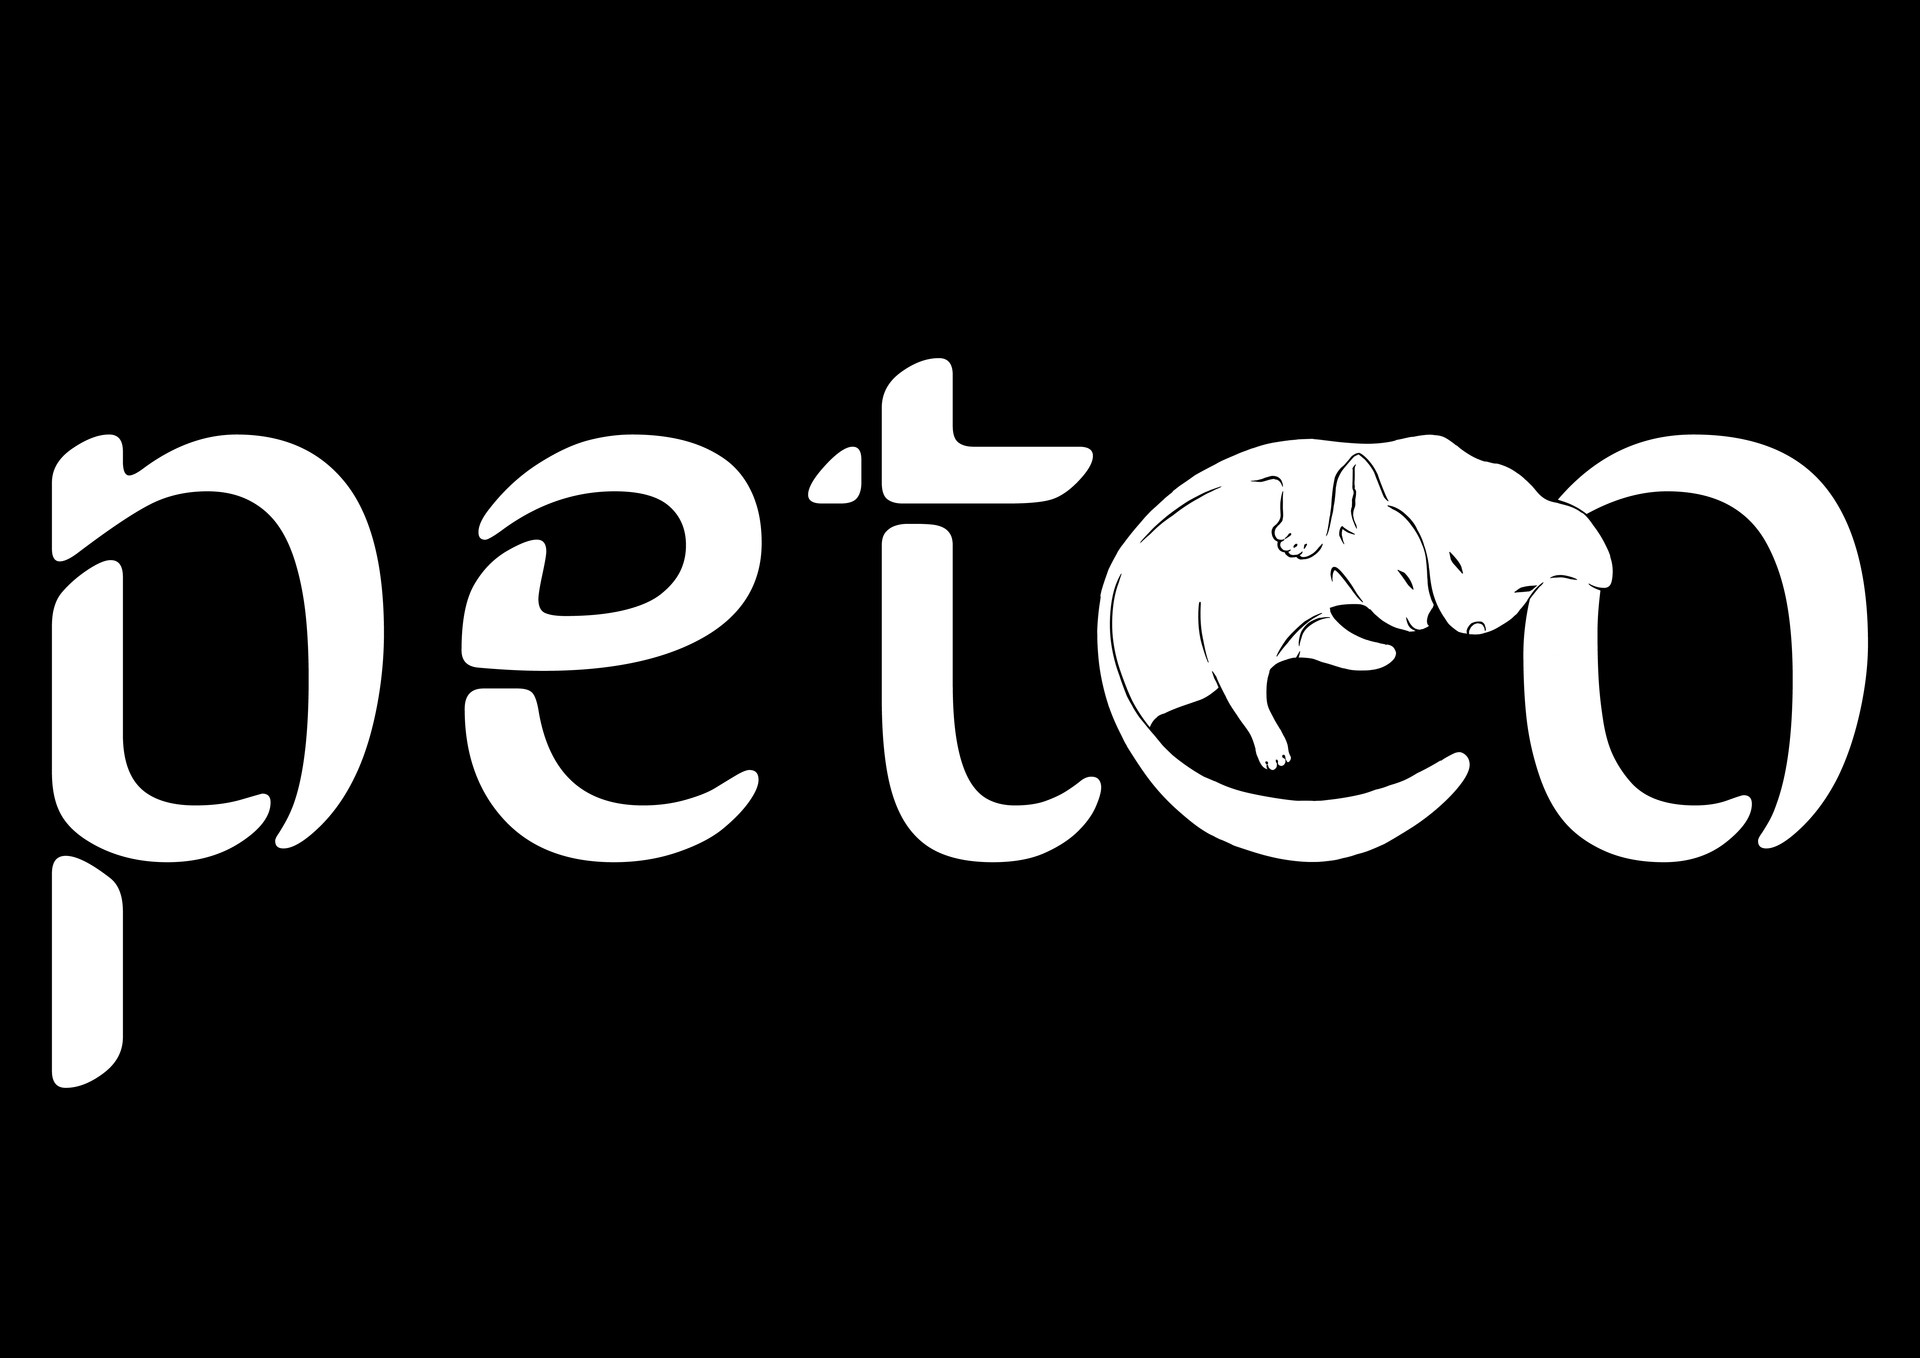 Petco Logo Black And White